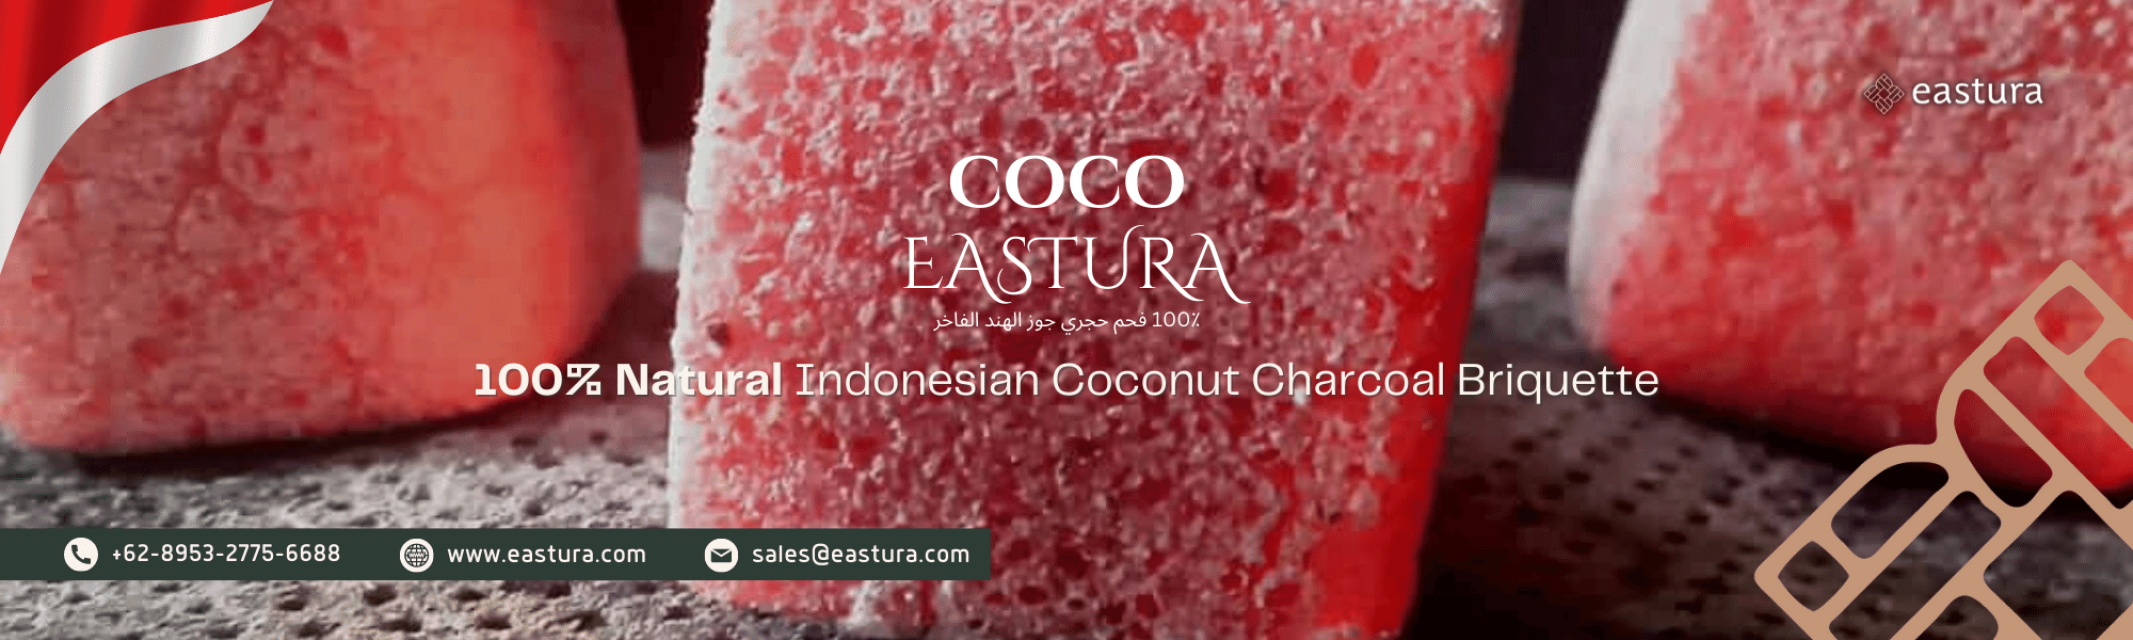 EASTURA Indonesia Charcoal